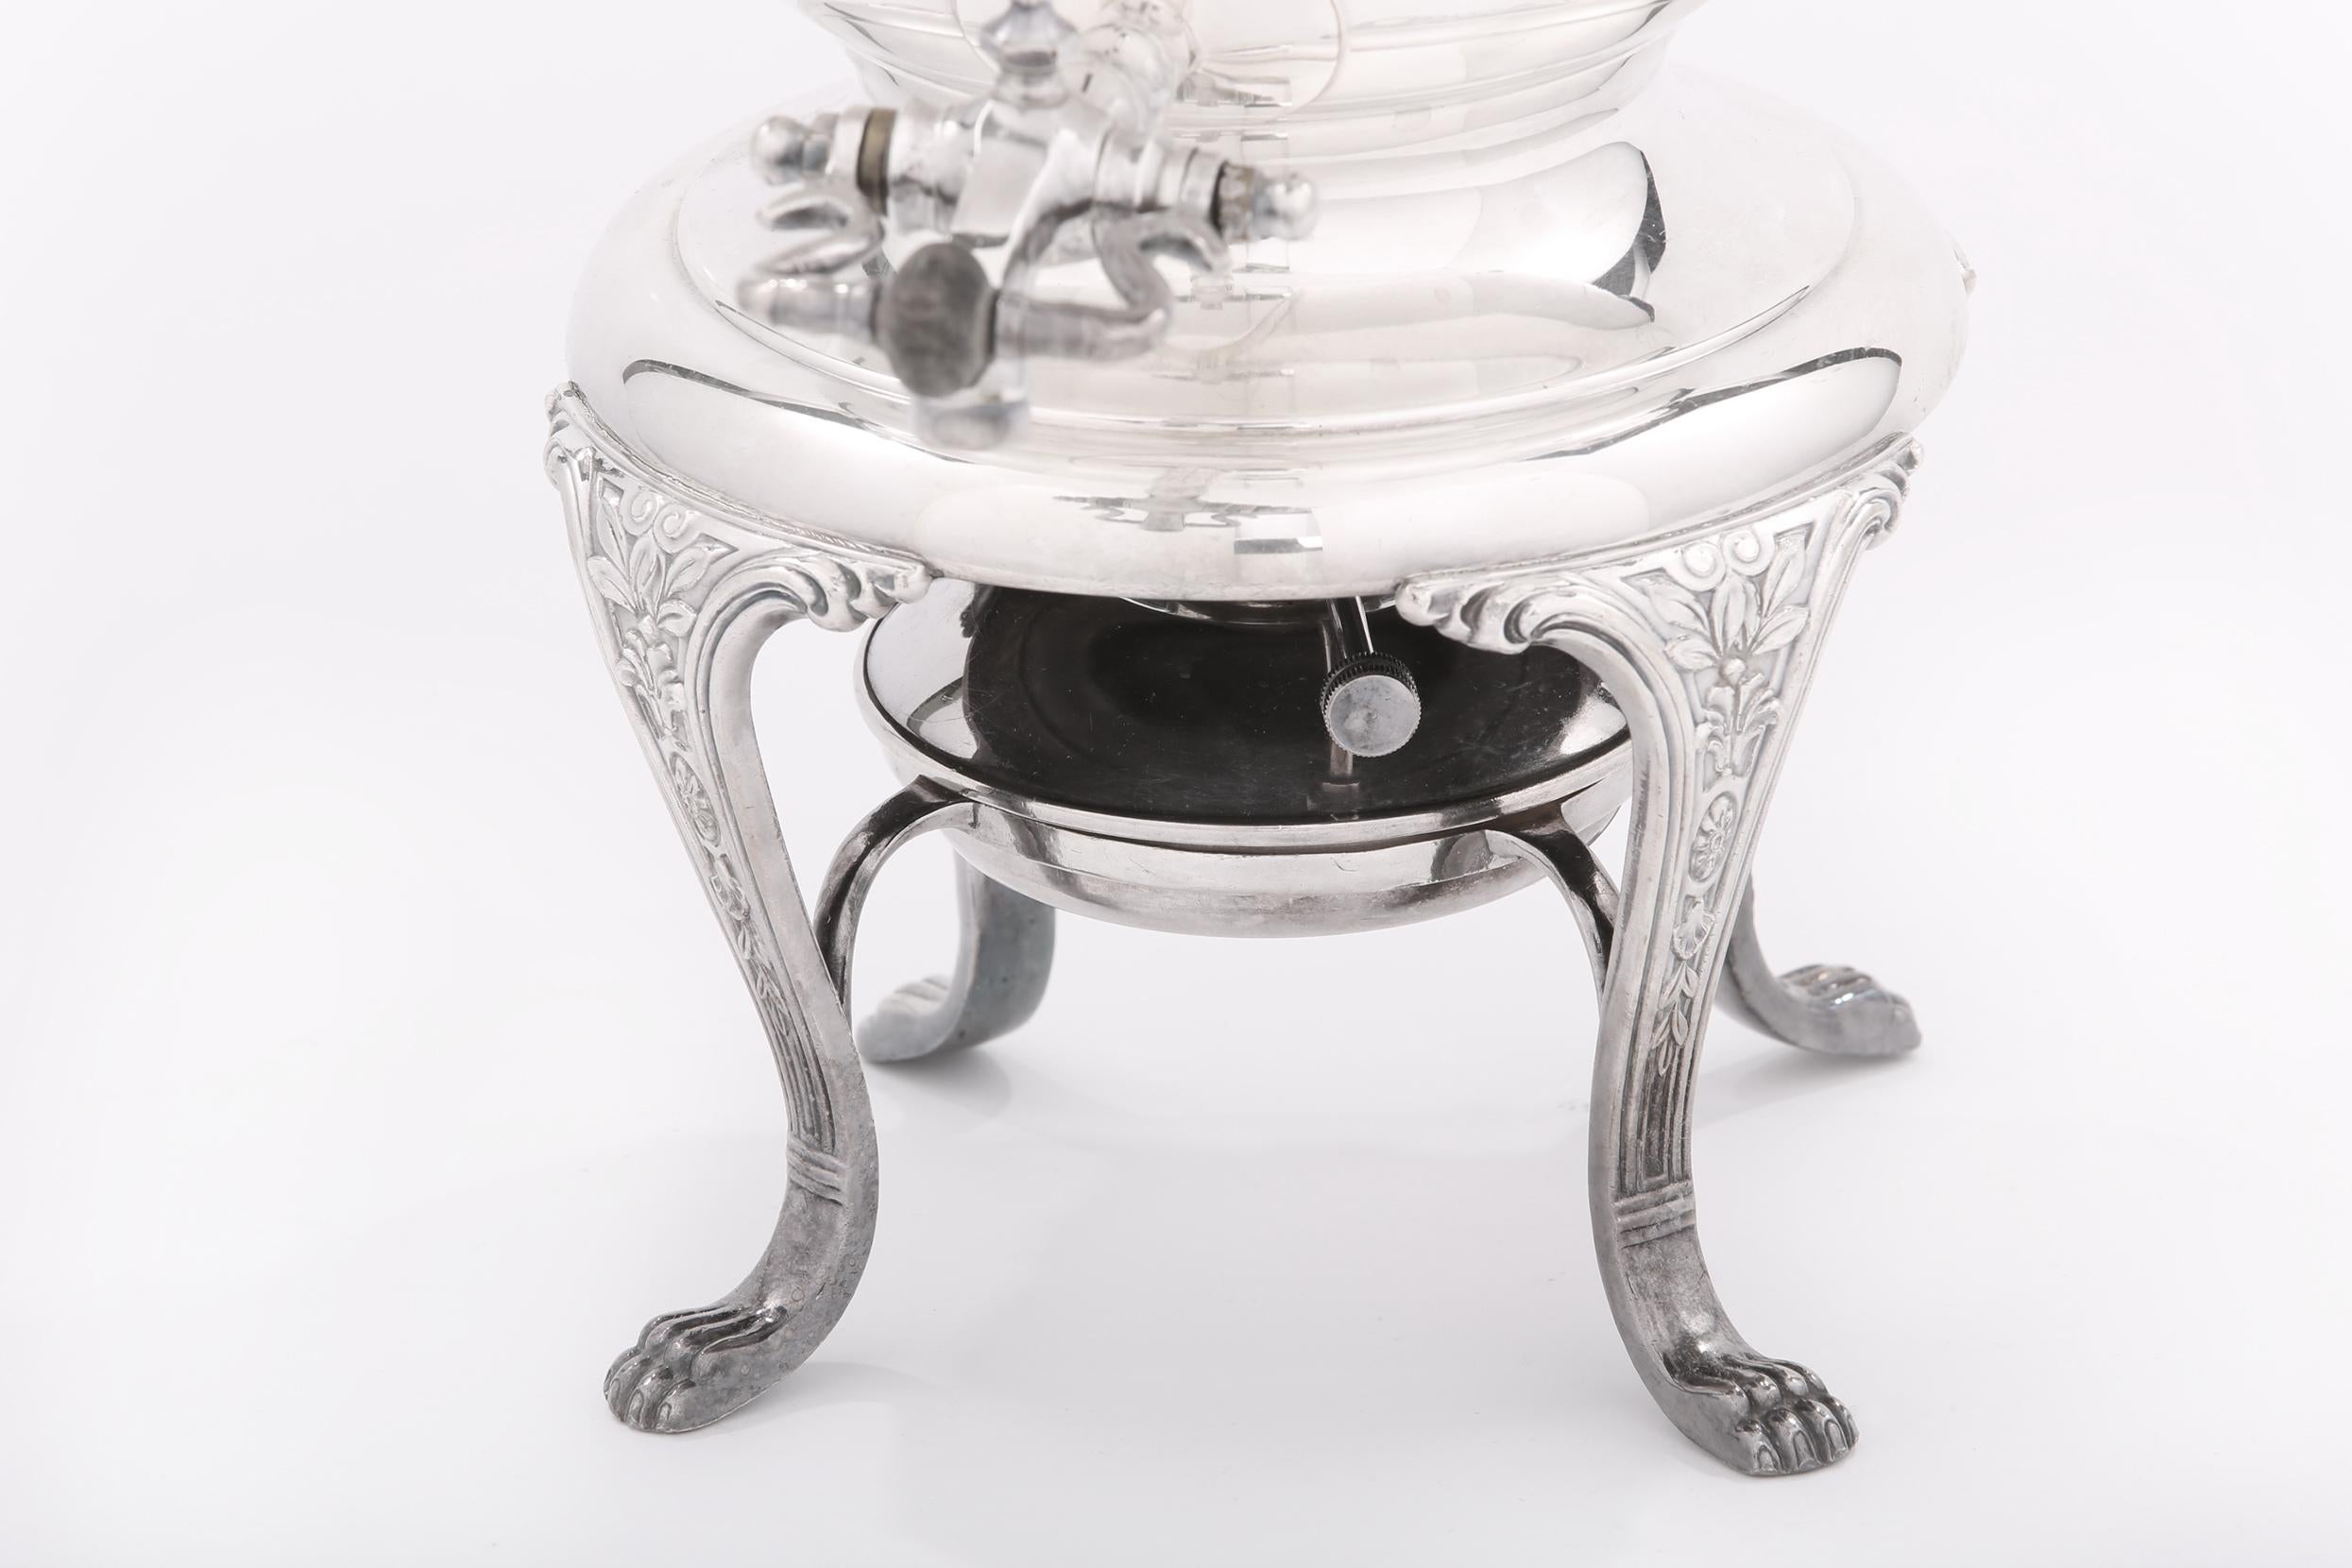 19th Century English Silver Plate Samovar / Tea Urn 1